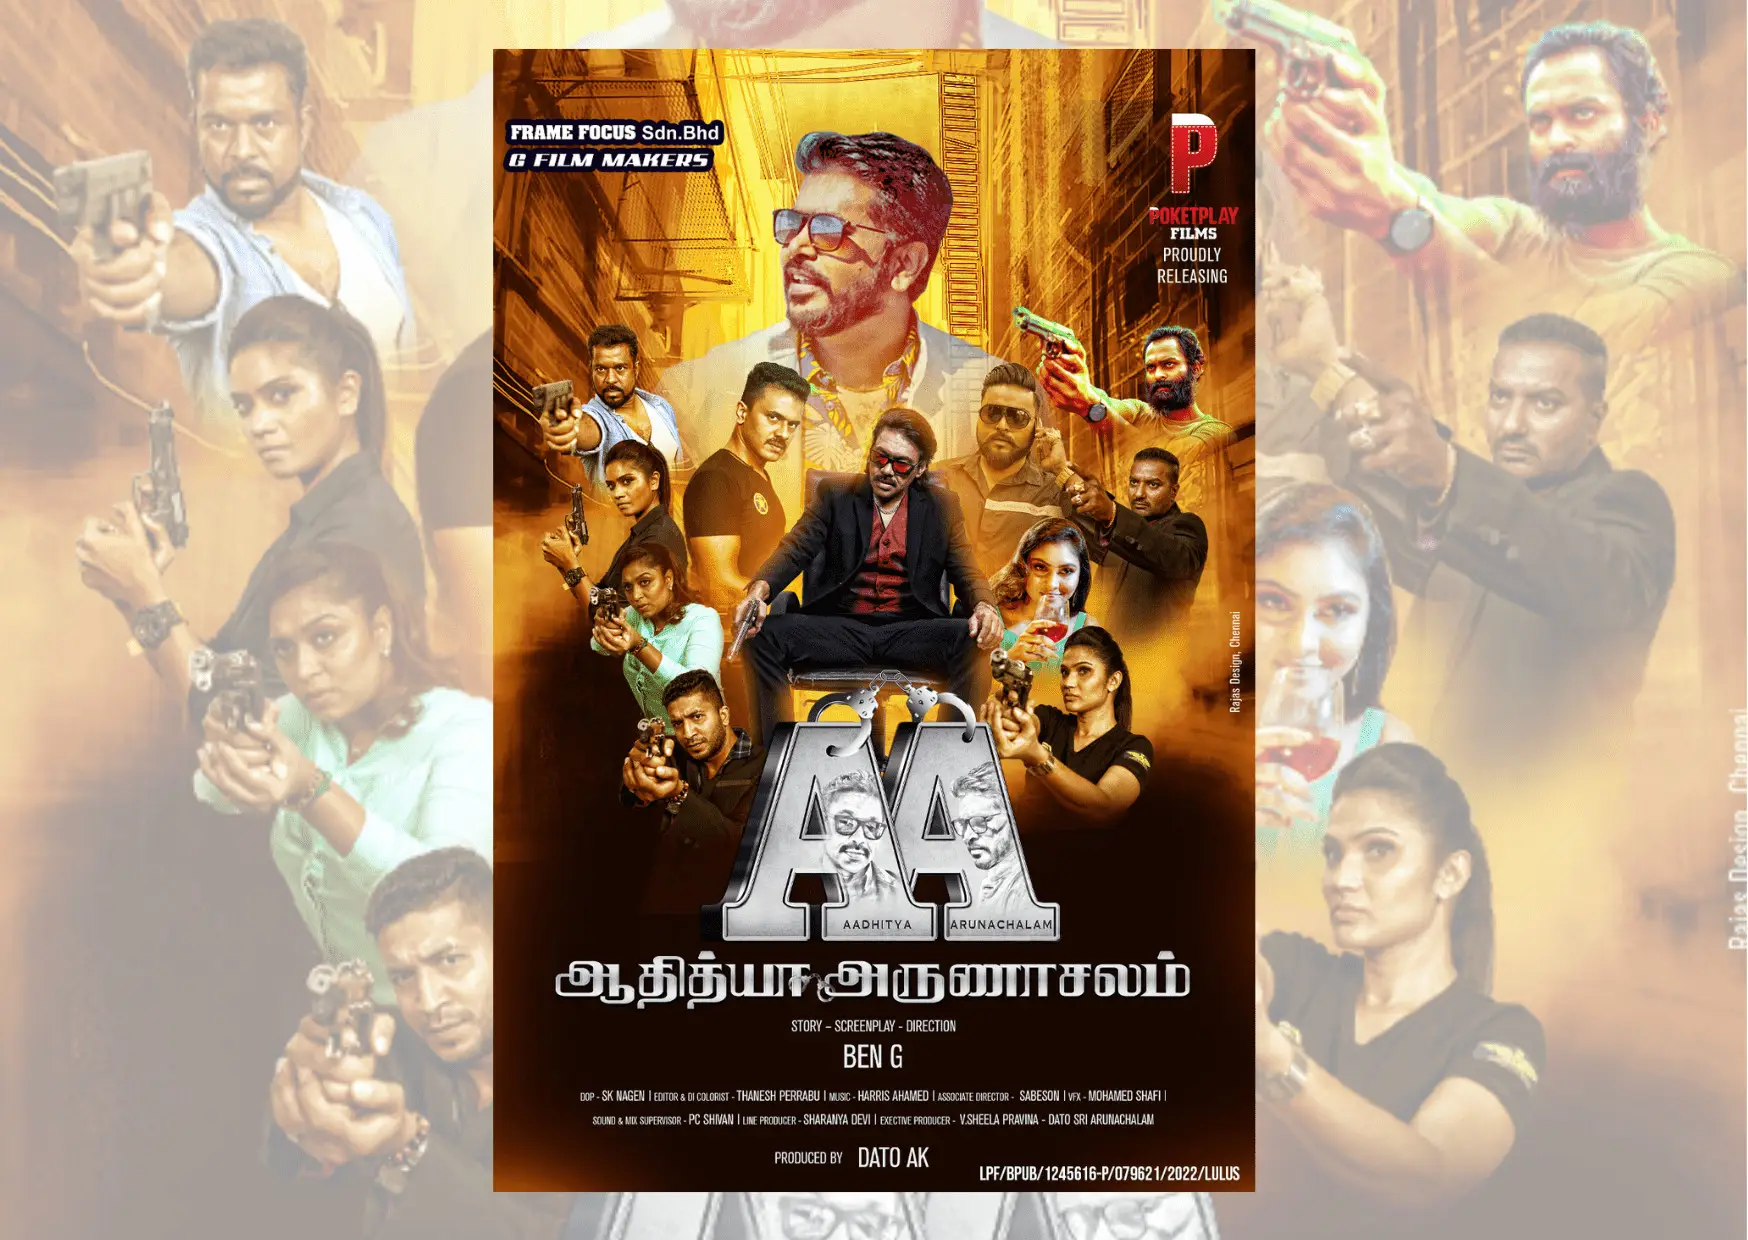 Aadhitya Arunachalam, The Long-Awaited Malaysian Action Thriller Film by Ben G Finally Hits The Big Screen - Varnam MY